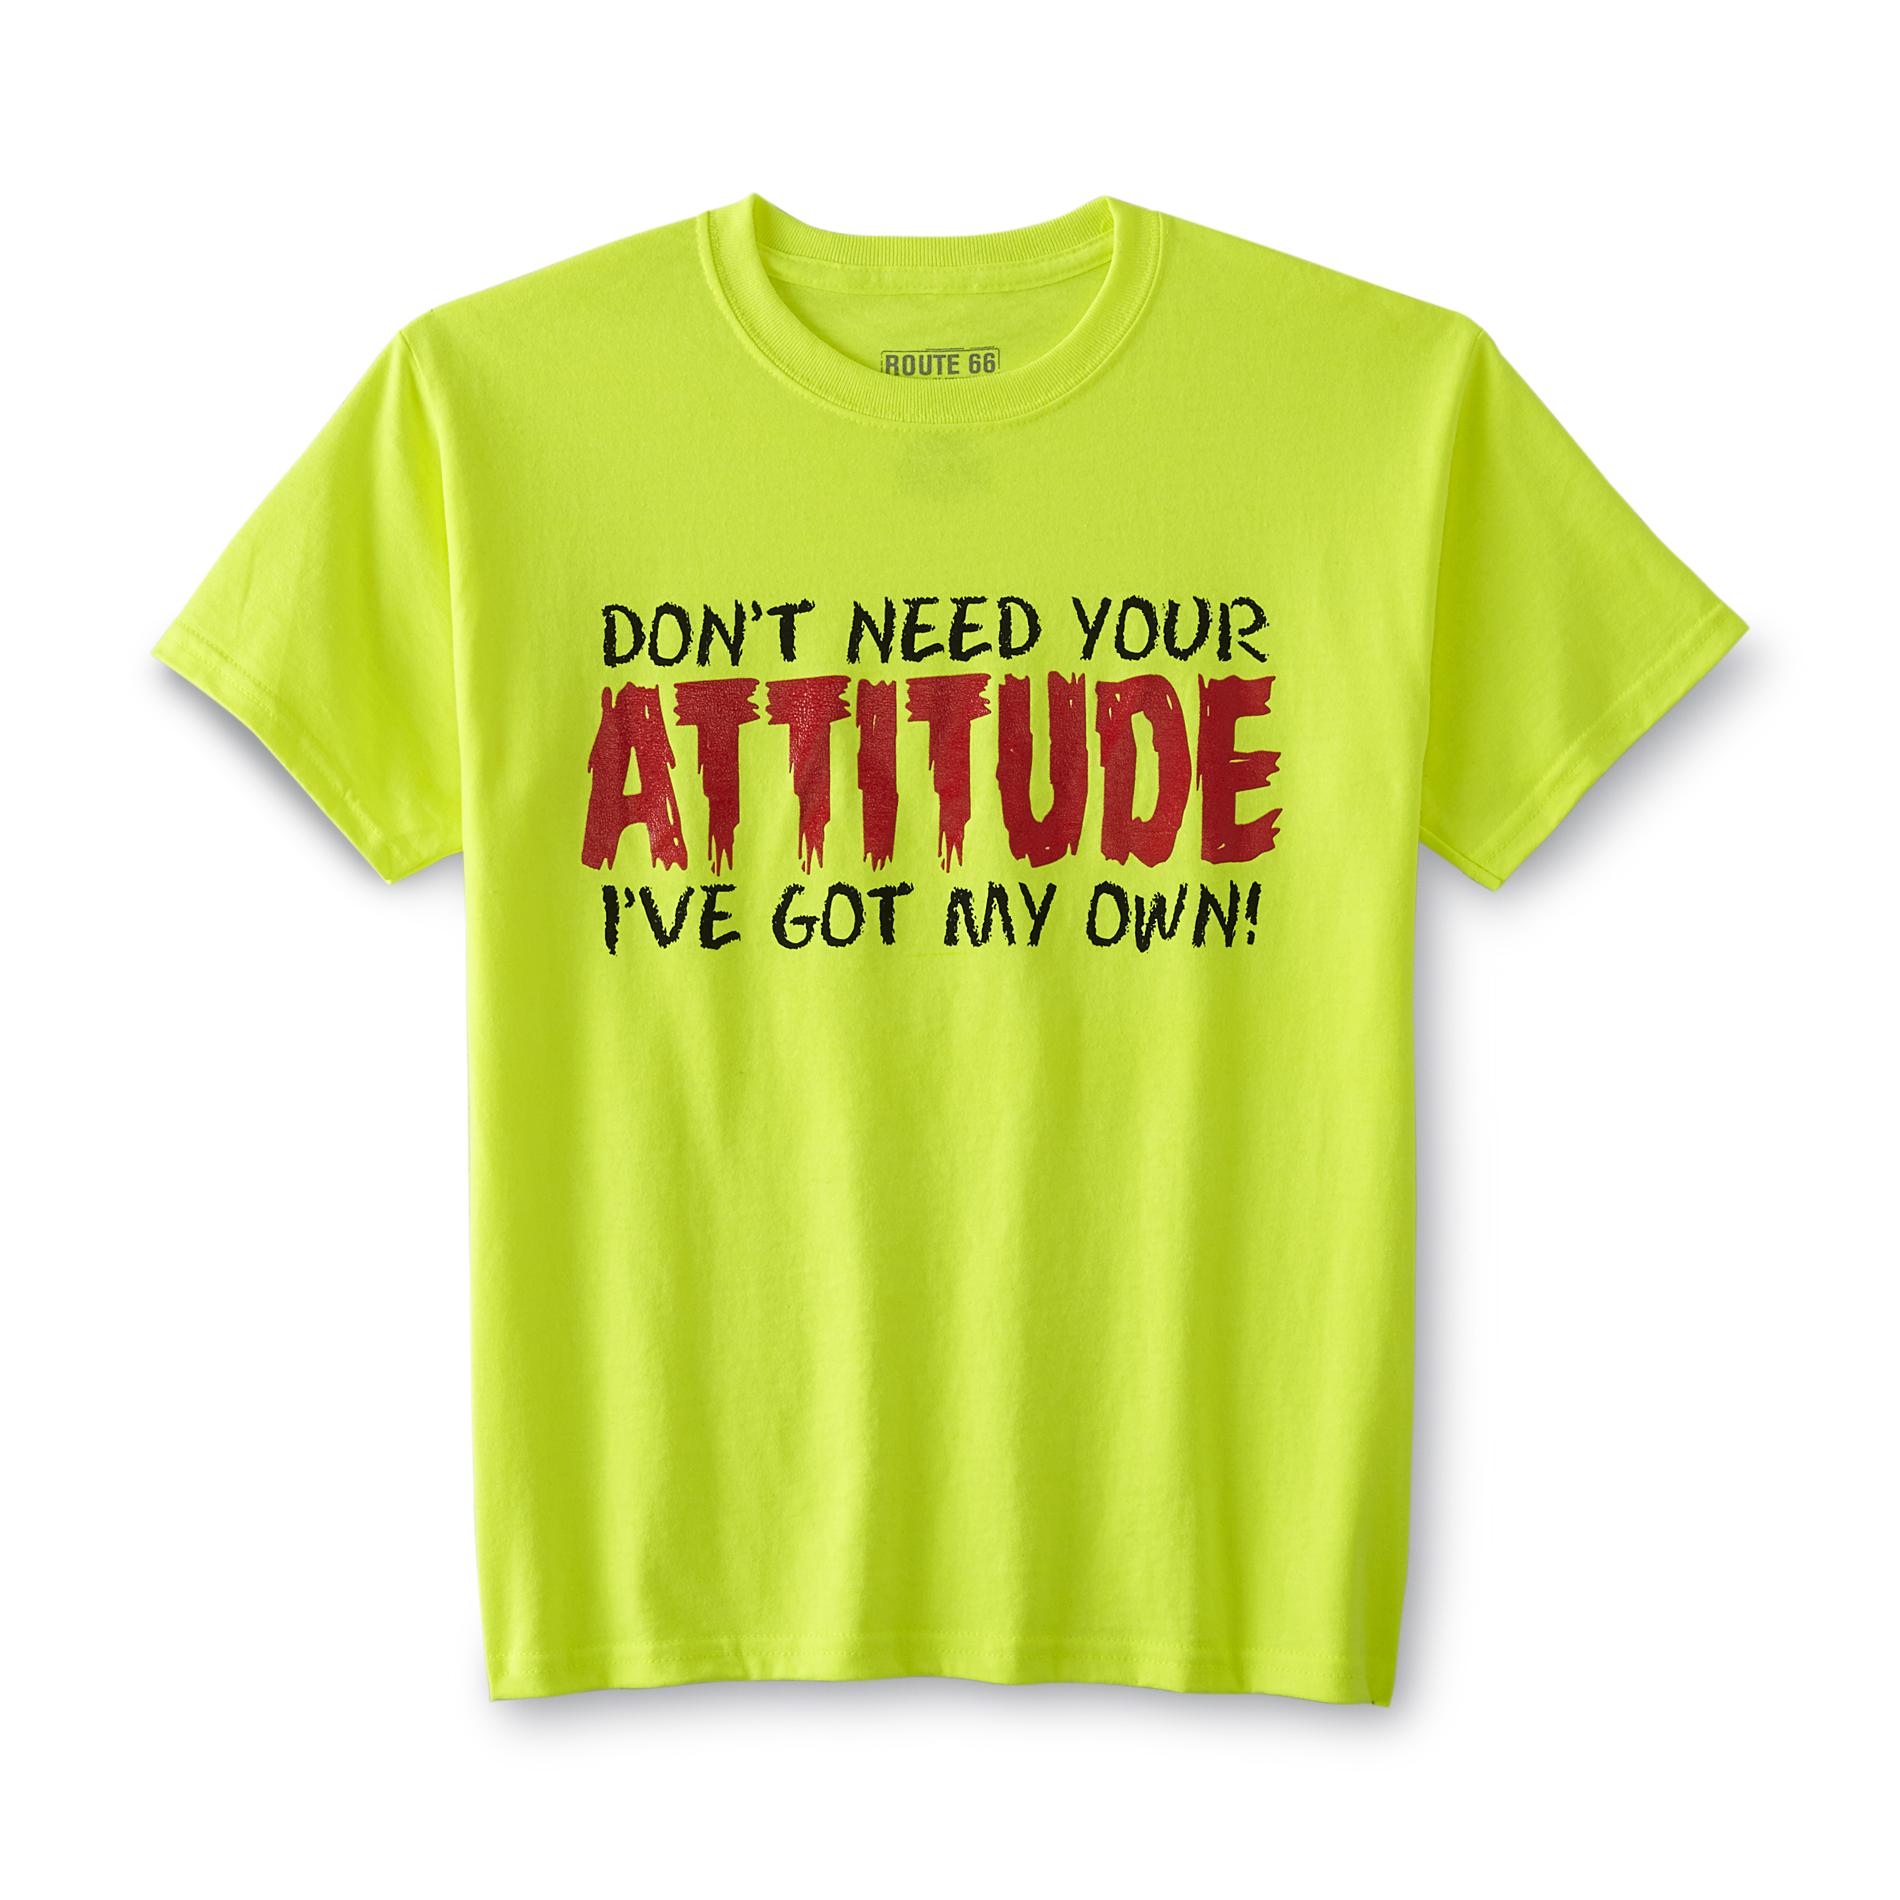 Route 66 Boy's Graphic T-Shirt - Attitude